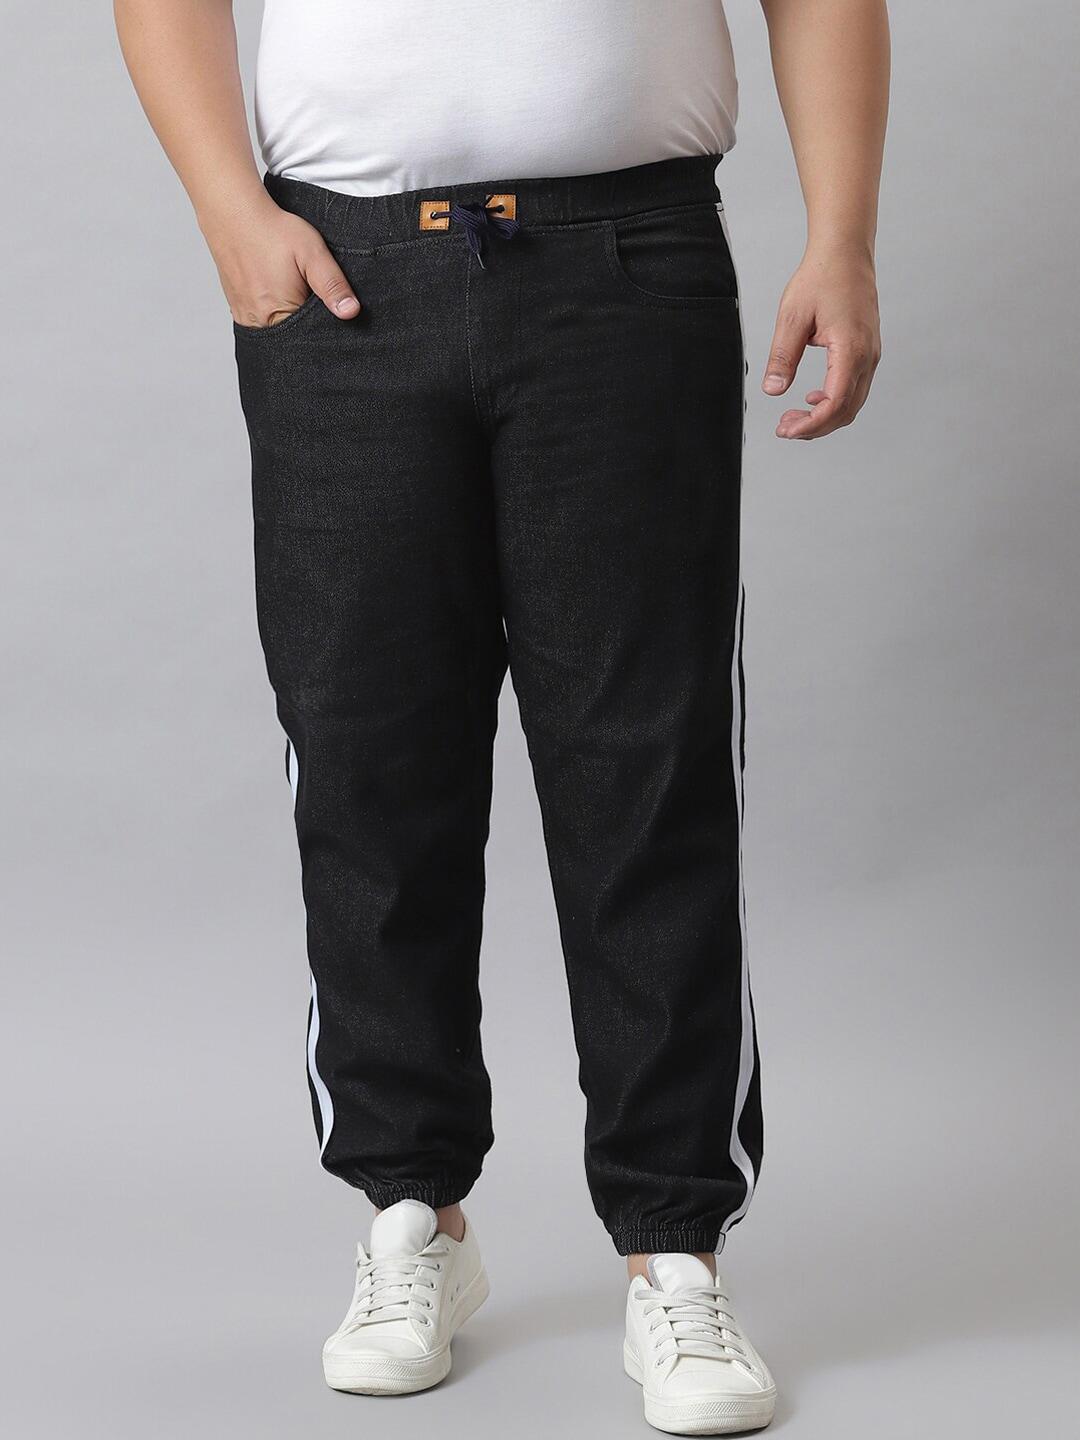 instafab-plus-men-black-side-striped-jogger-jeans